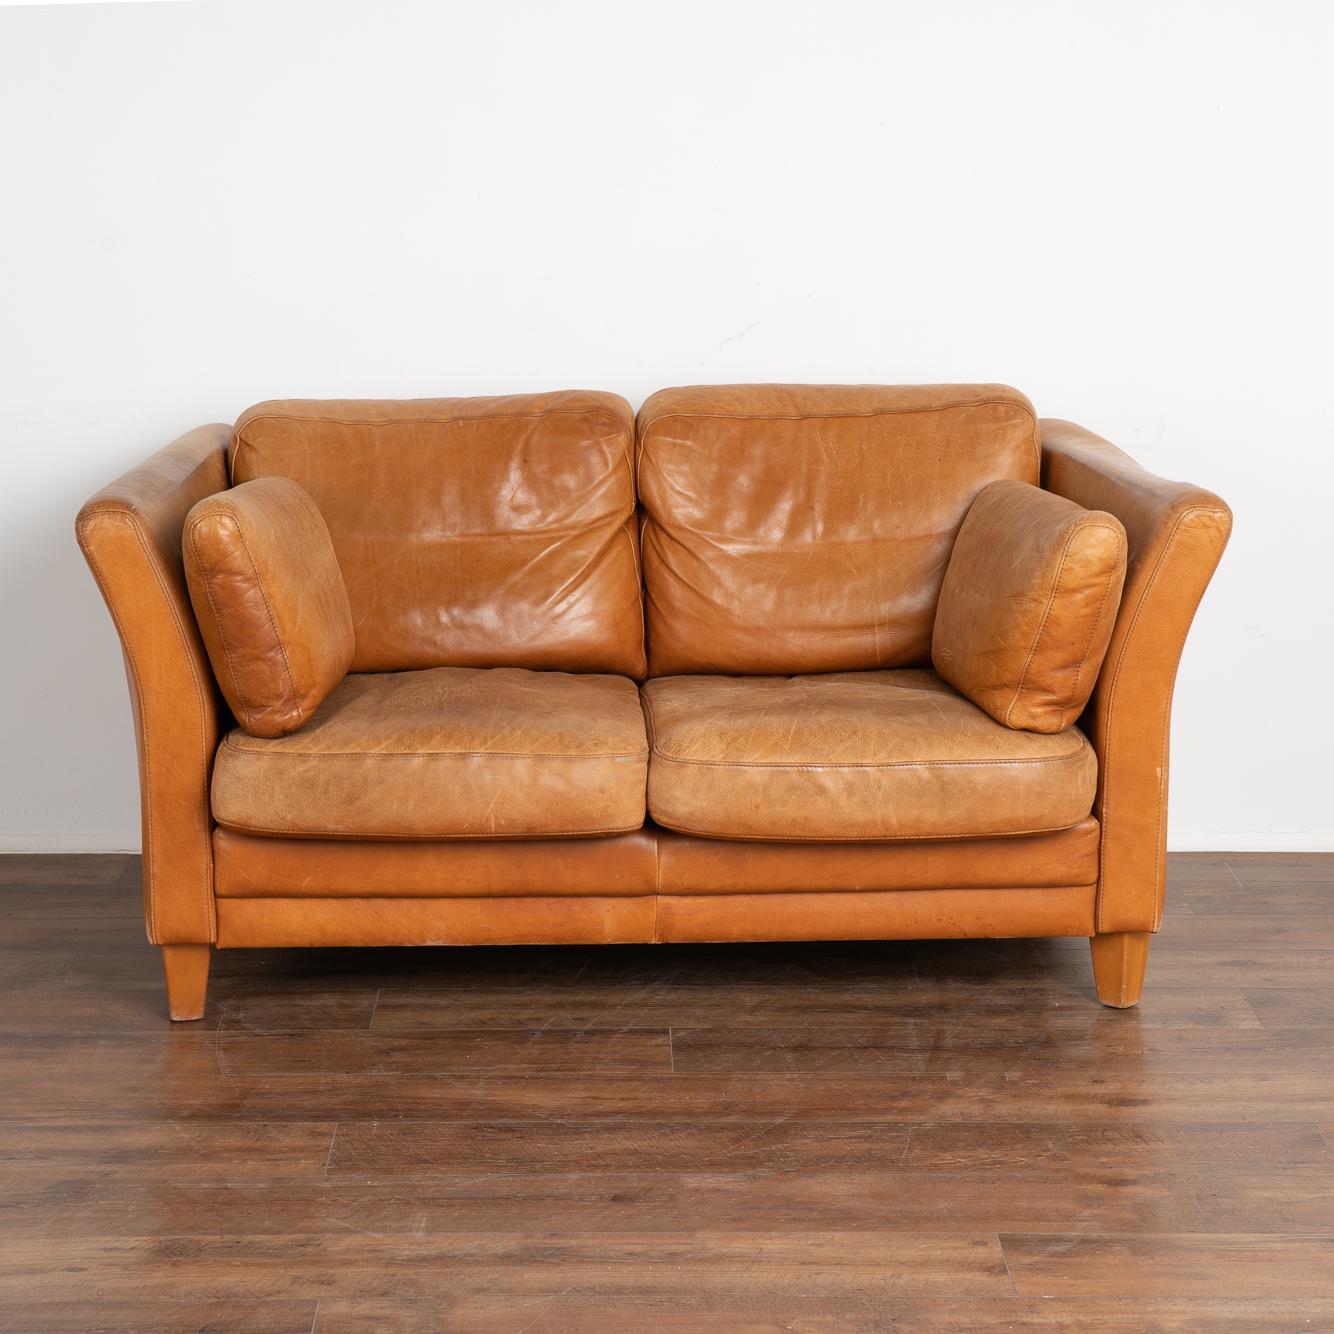 Danish Mid-Century Modern Two Seat Sofa Loveseat in Caramel Brown Leather, circa 1970